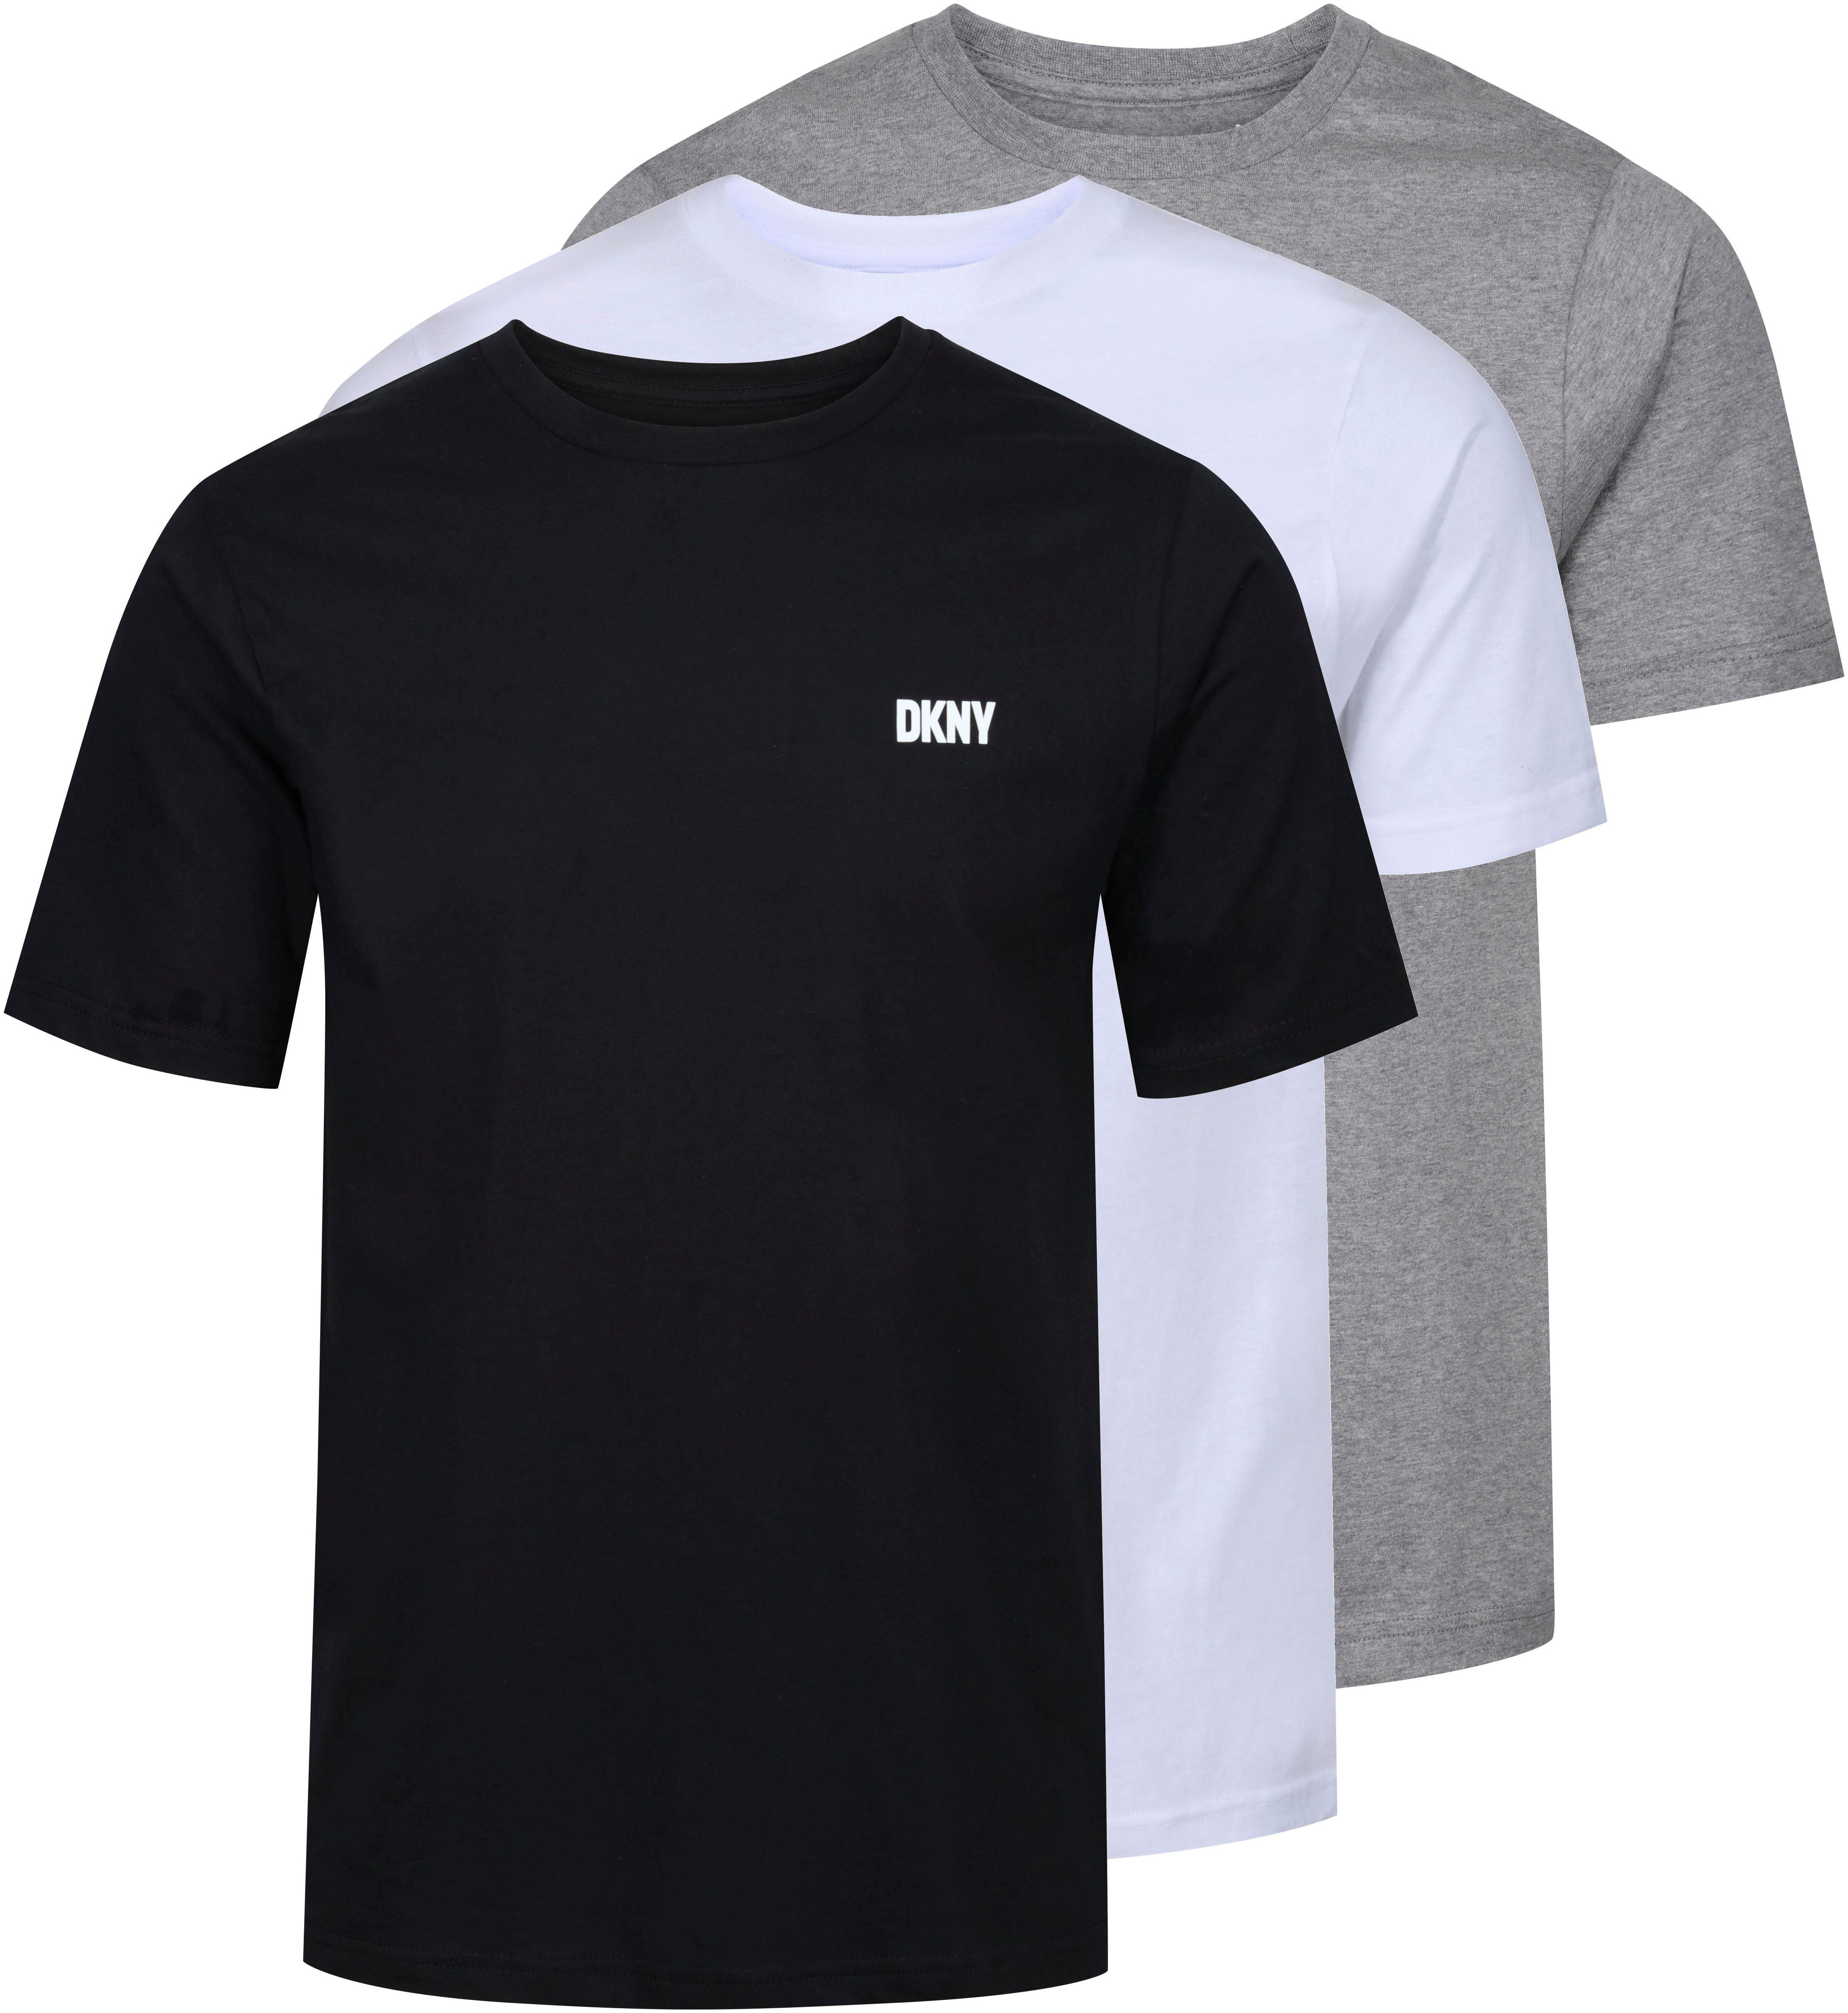 DKNY T-Shirt GIANTS black/white/